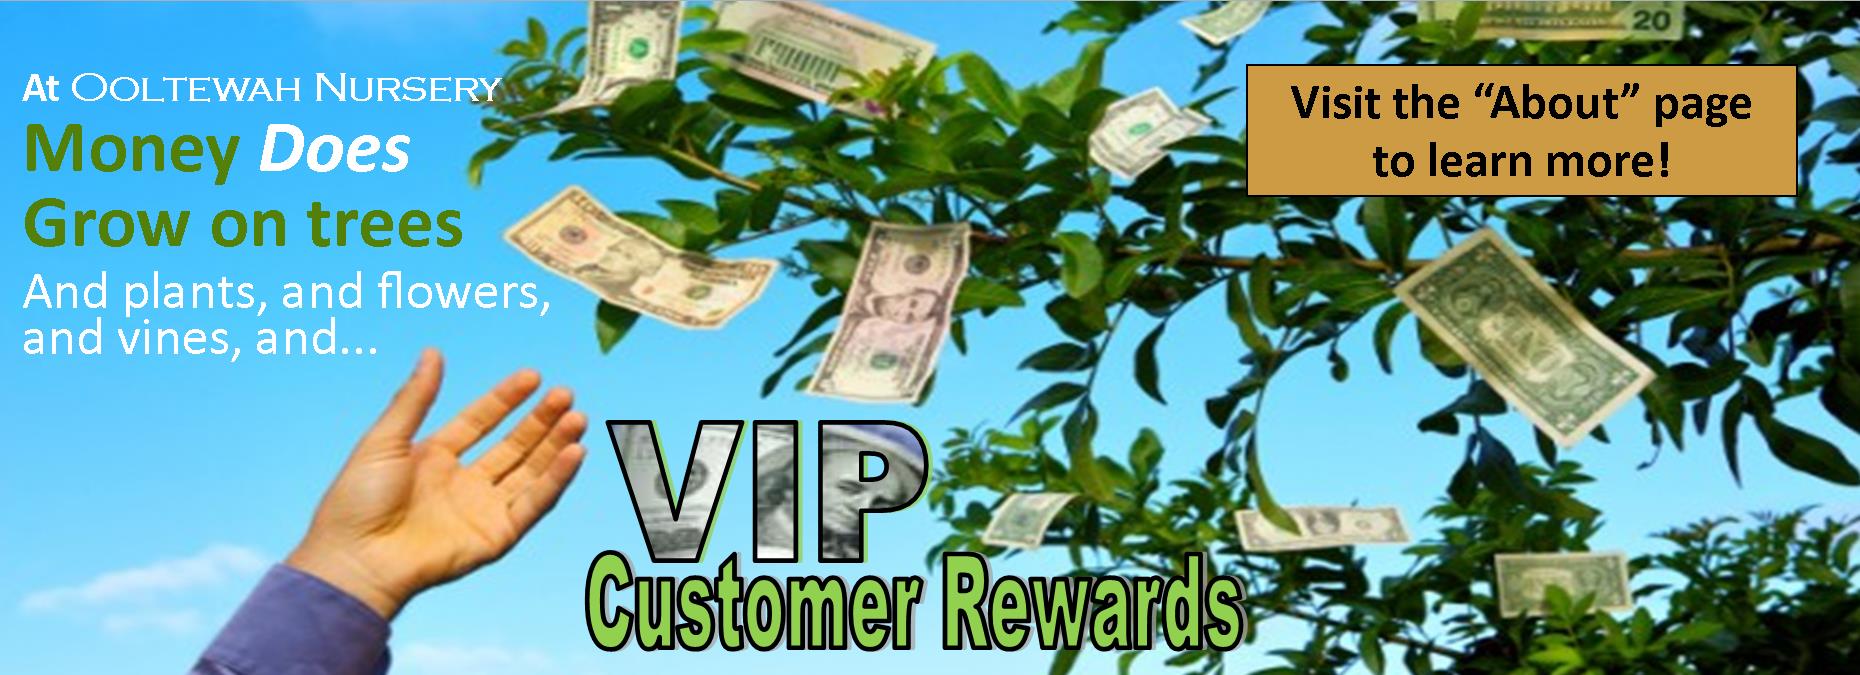 assets/Uploads/VIP-Rewards24.jpg